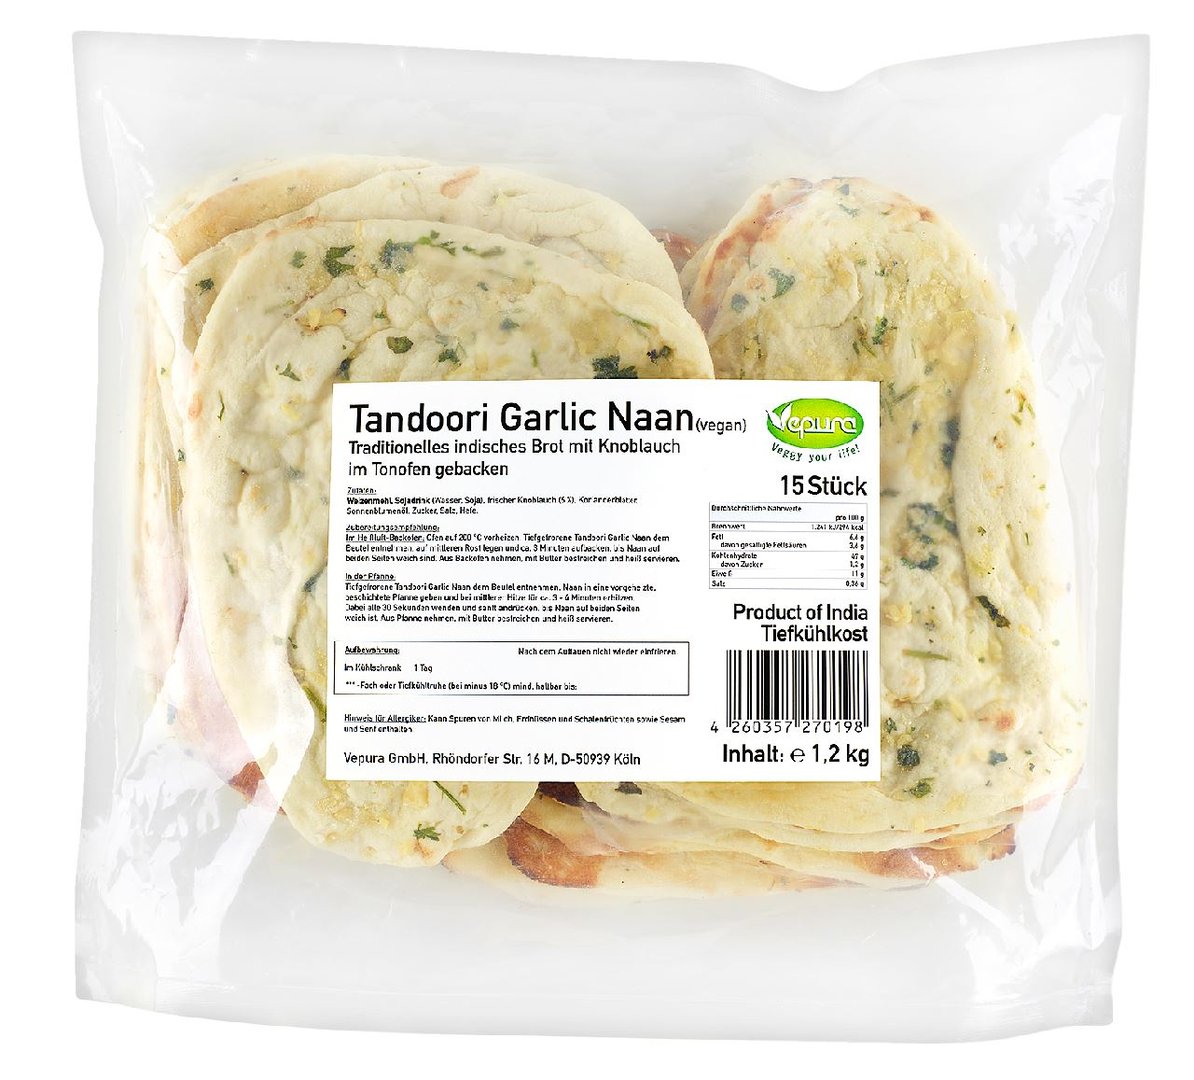 Vepura - Vegan Tandoori Garlicnaa tiefgefroren 15 Stück à 80 g - 1,2 kg Beutel